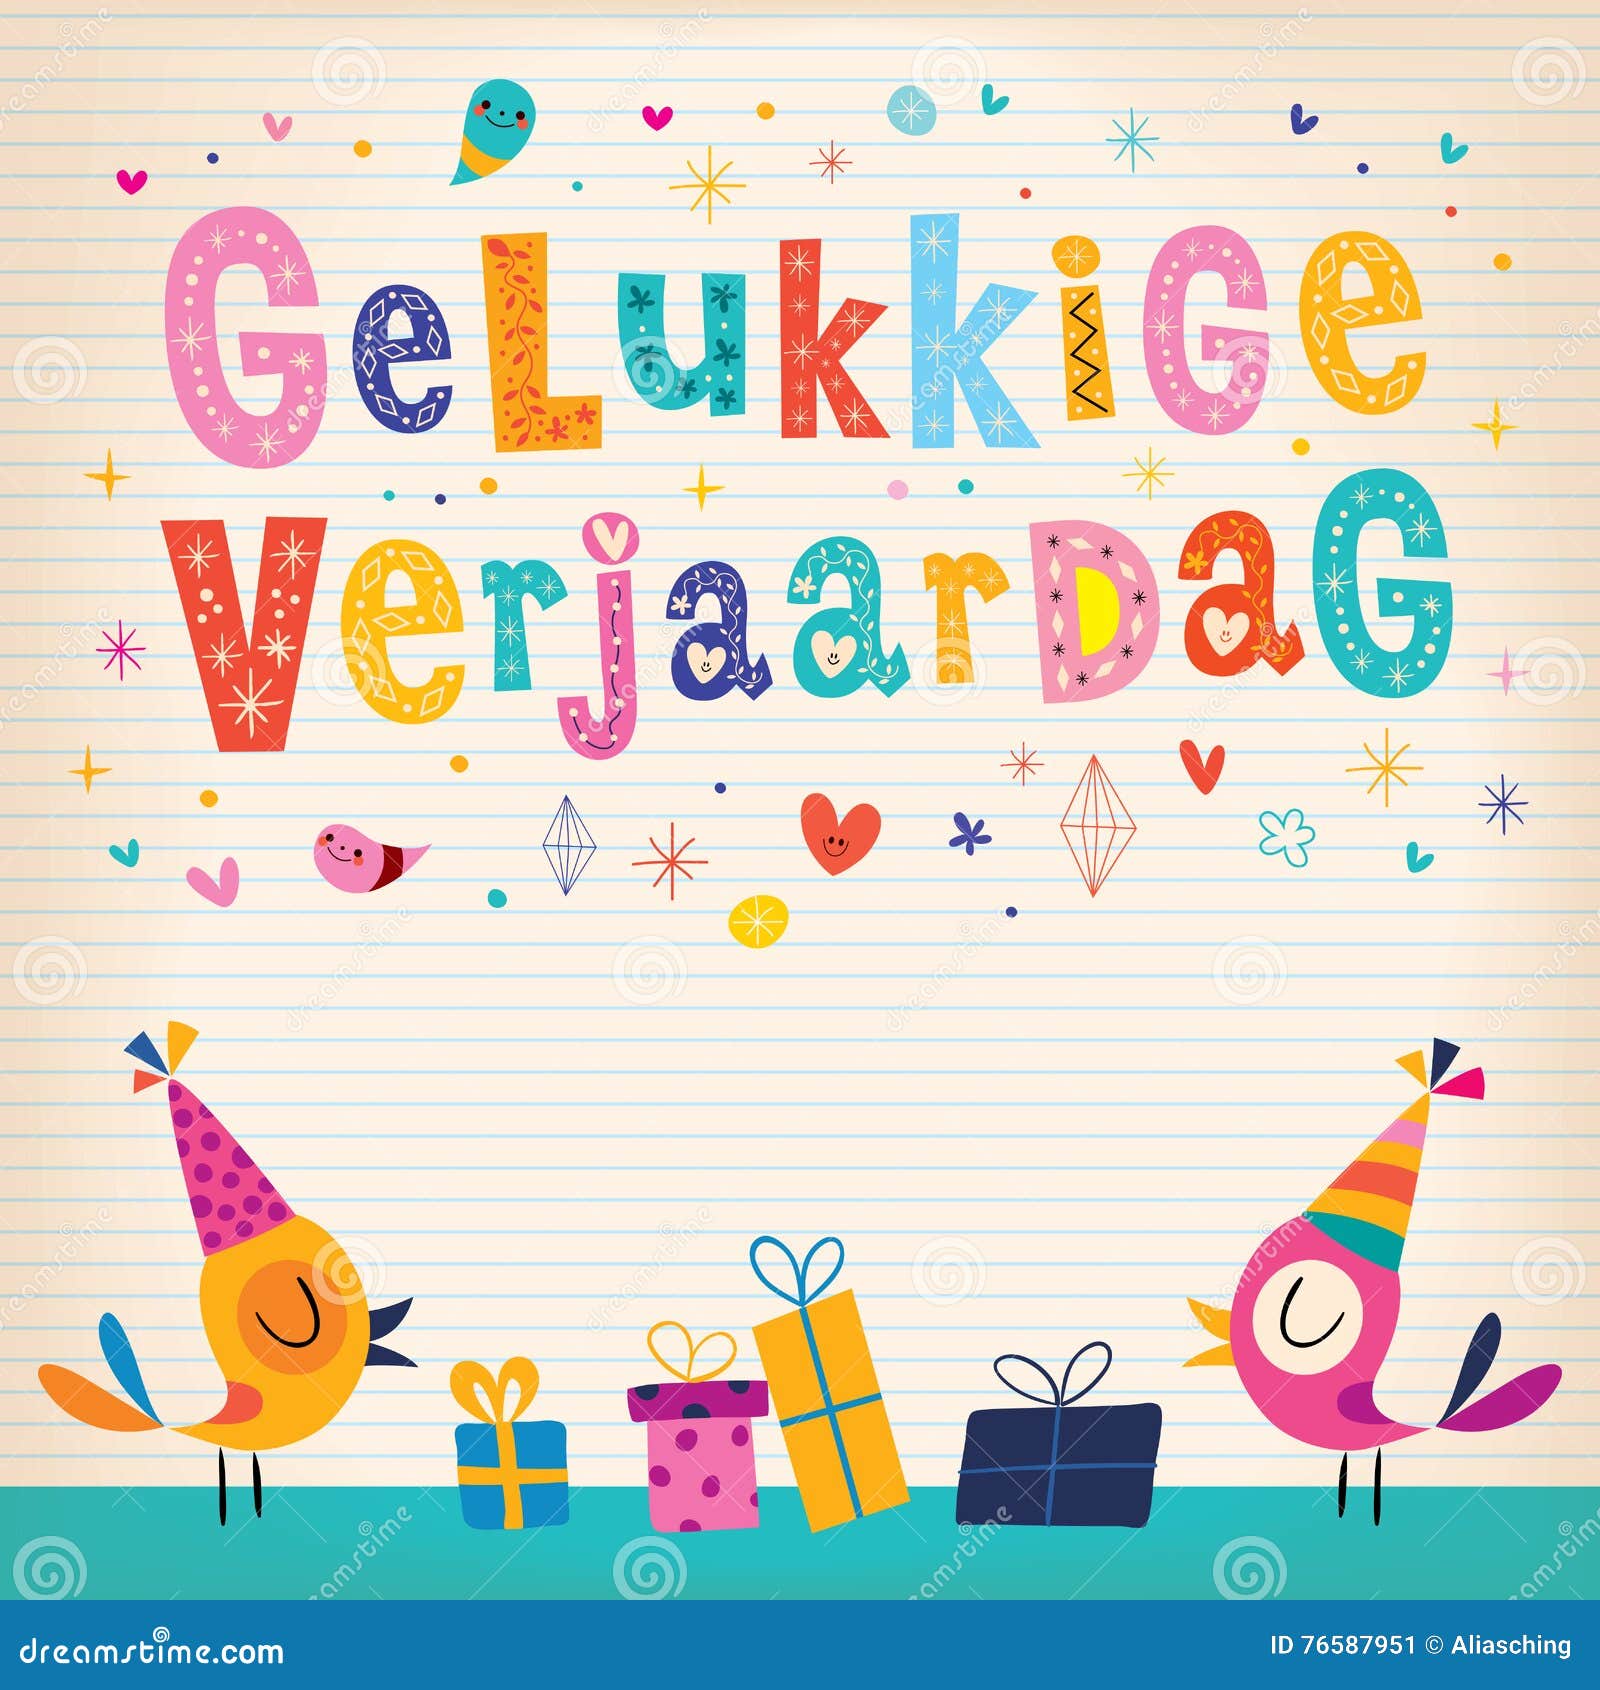 Carte de vœux for Sale avec l'œuvre « Carte d'anniversaire néerlandaise  avec texte en néerlandais (verjaardagskaart fijne verjaardag) » de  l'artiste Pommallina